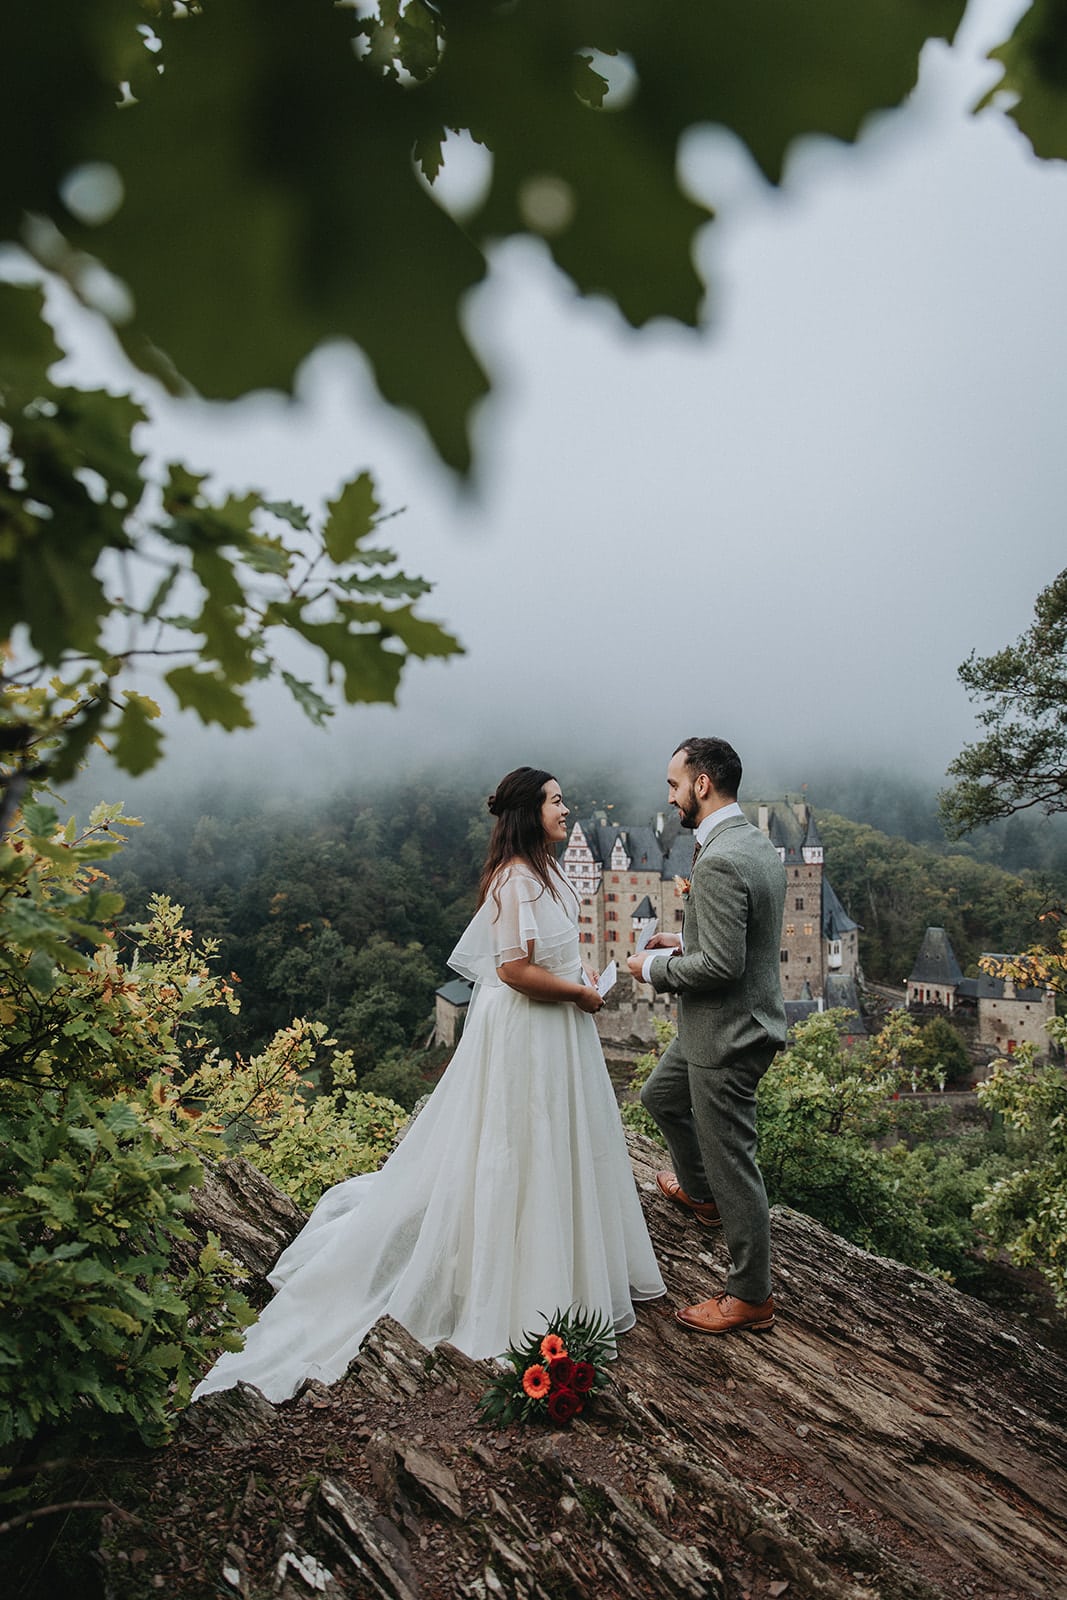 Bride and groom exchange wedding vows in front of Eltz castle in Germany